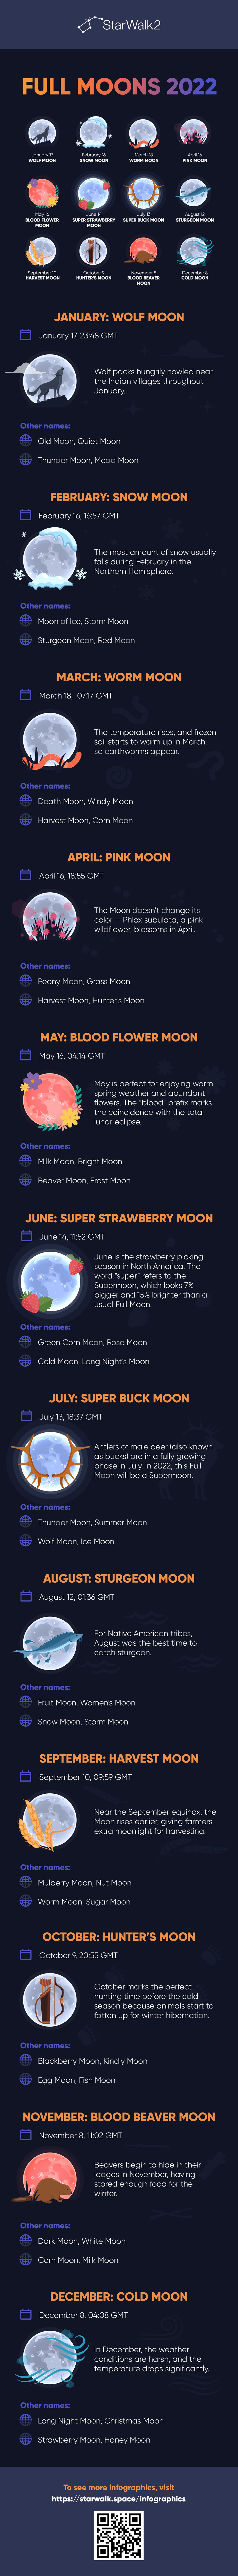 Full Moon Calendar August 2022 Full Moon Calendar 2022 | Full Moon Dates 2022 | Moon Names 2022 | Star Walk